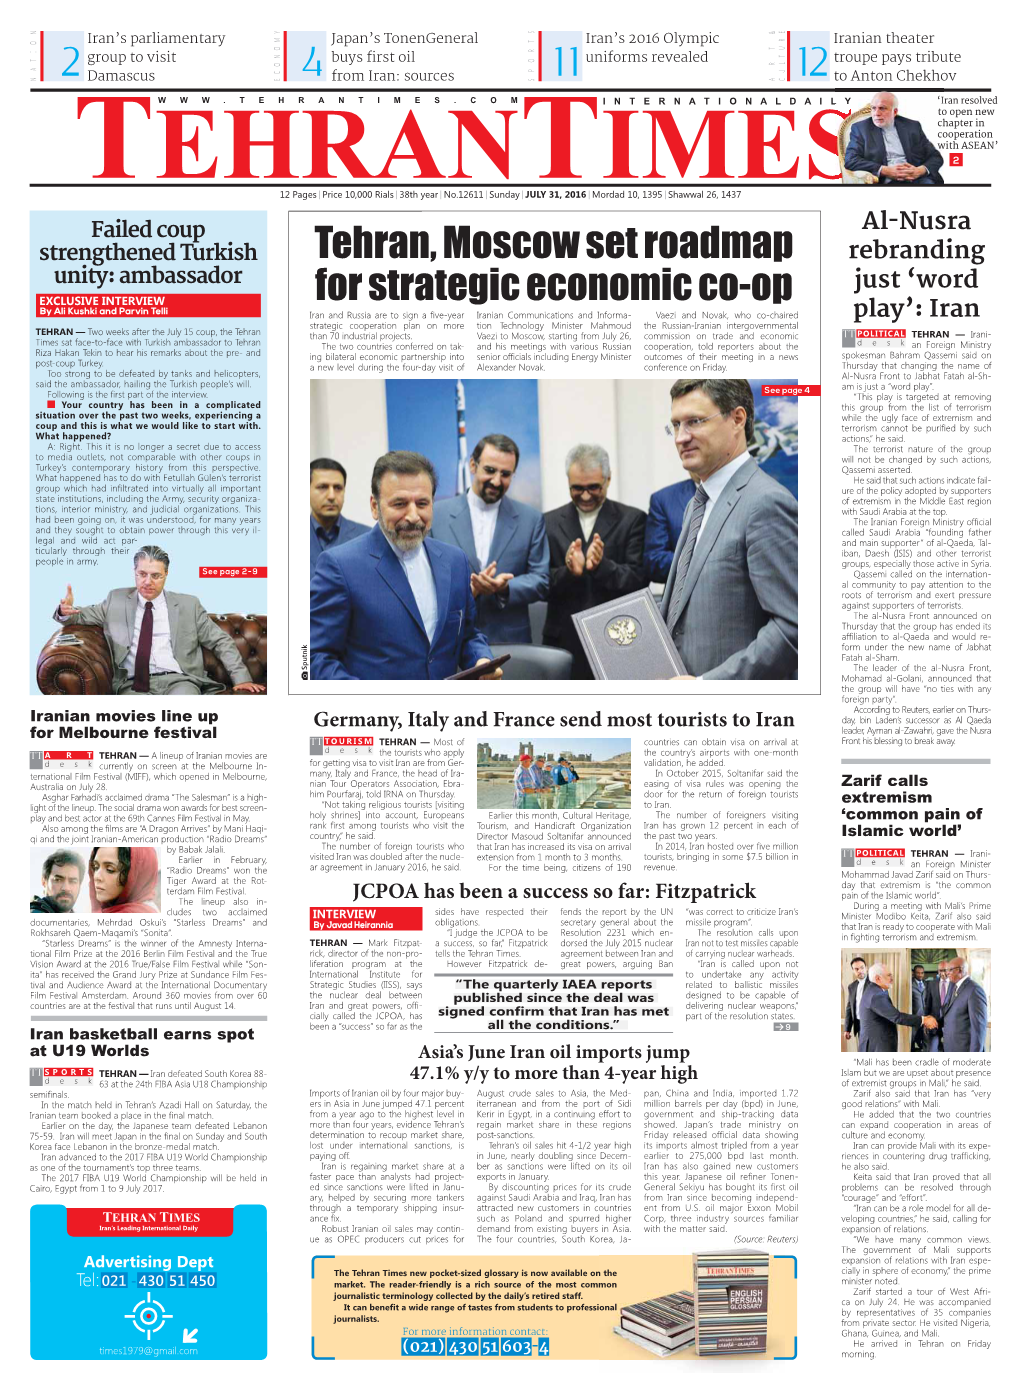 Tehran, Moscow Set Roadmap for Strategic Economic Co-Op